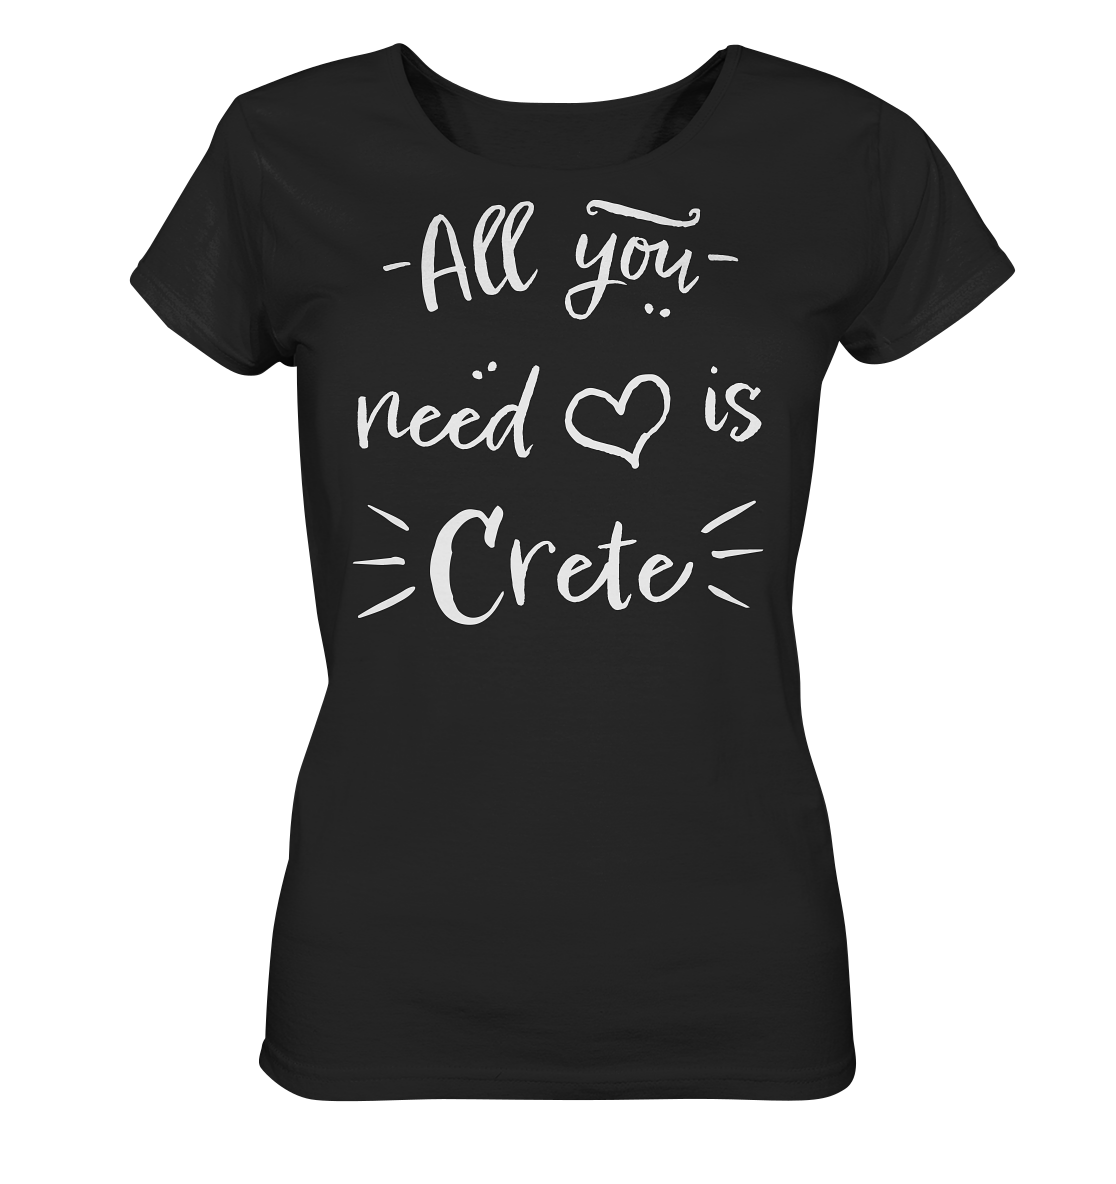 %SALE% - Return, as good as new, unworn - All you need is Crete - Ladies Organic Shirt